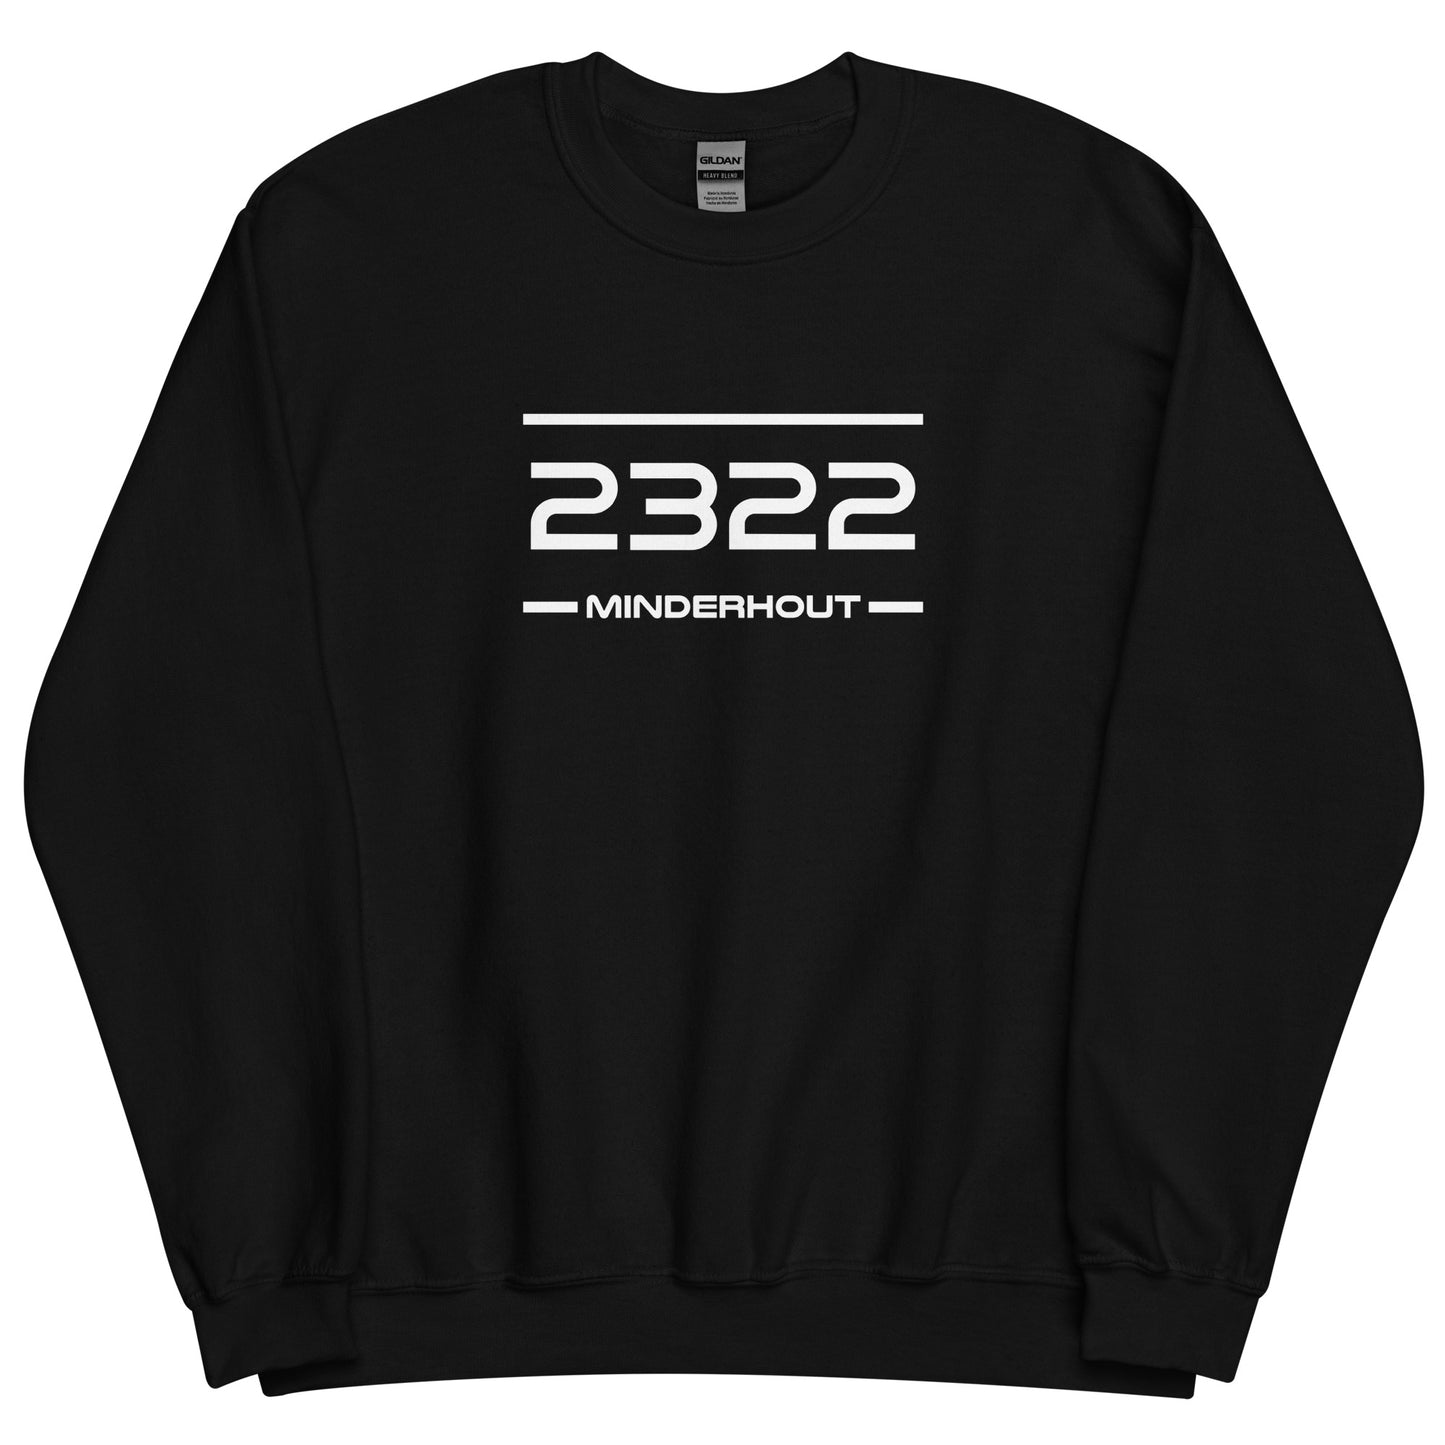 Sweater - 2322 - Minderhout (M/V)